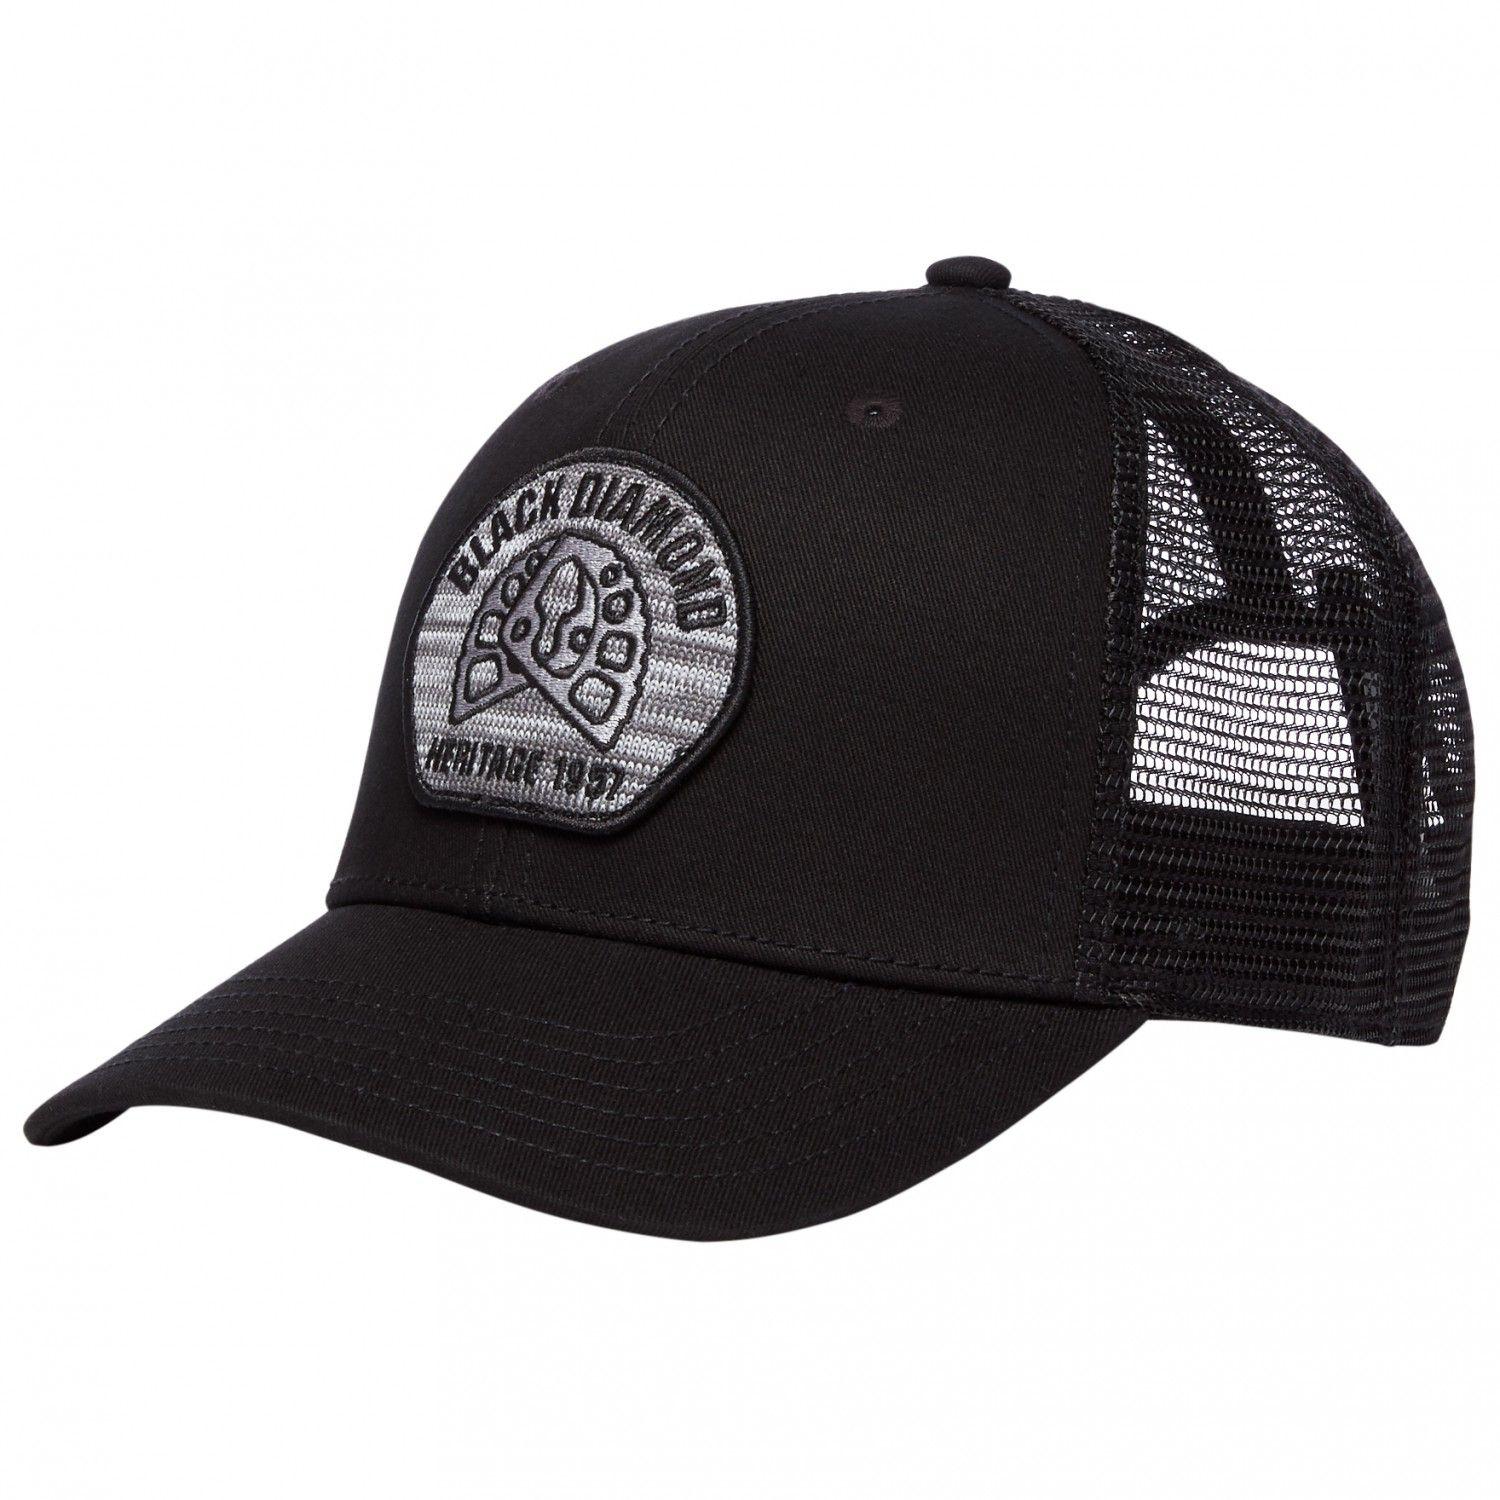 Black and White Diamond Clothing Logo - Black Diamond Black Diamond Trucker Hat. Buy online